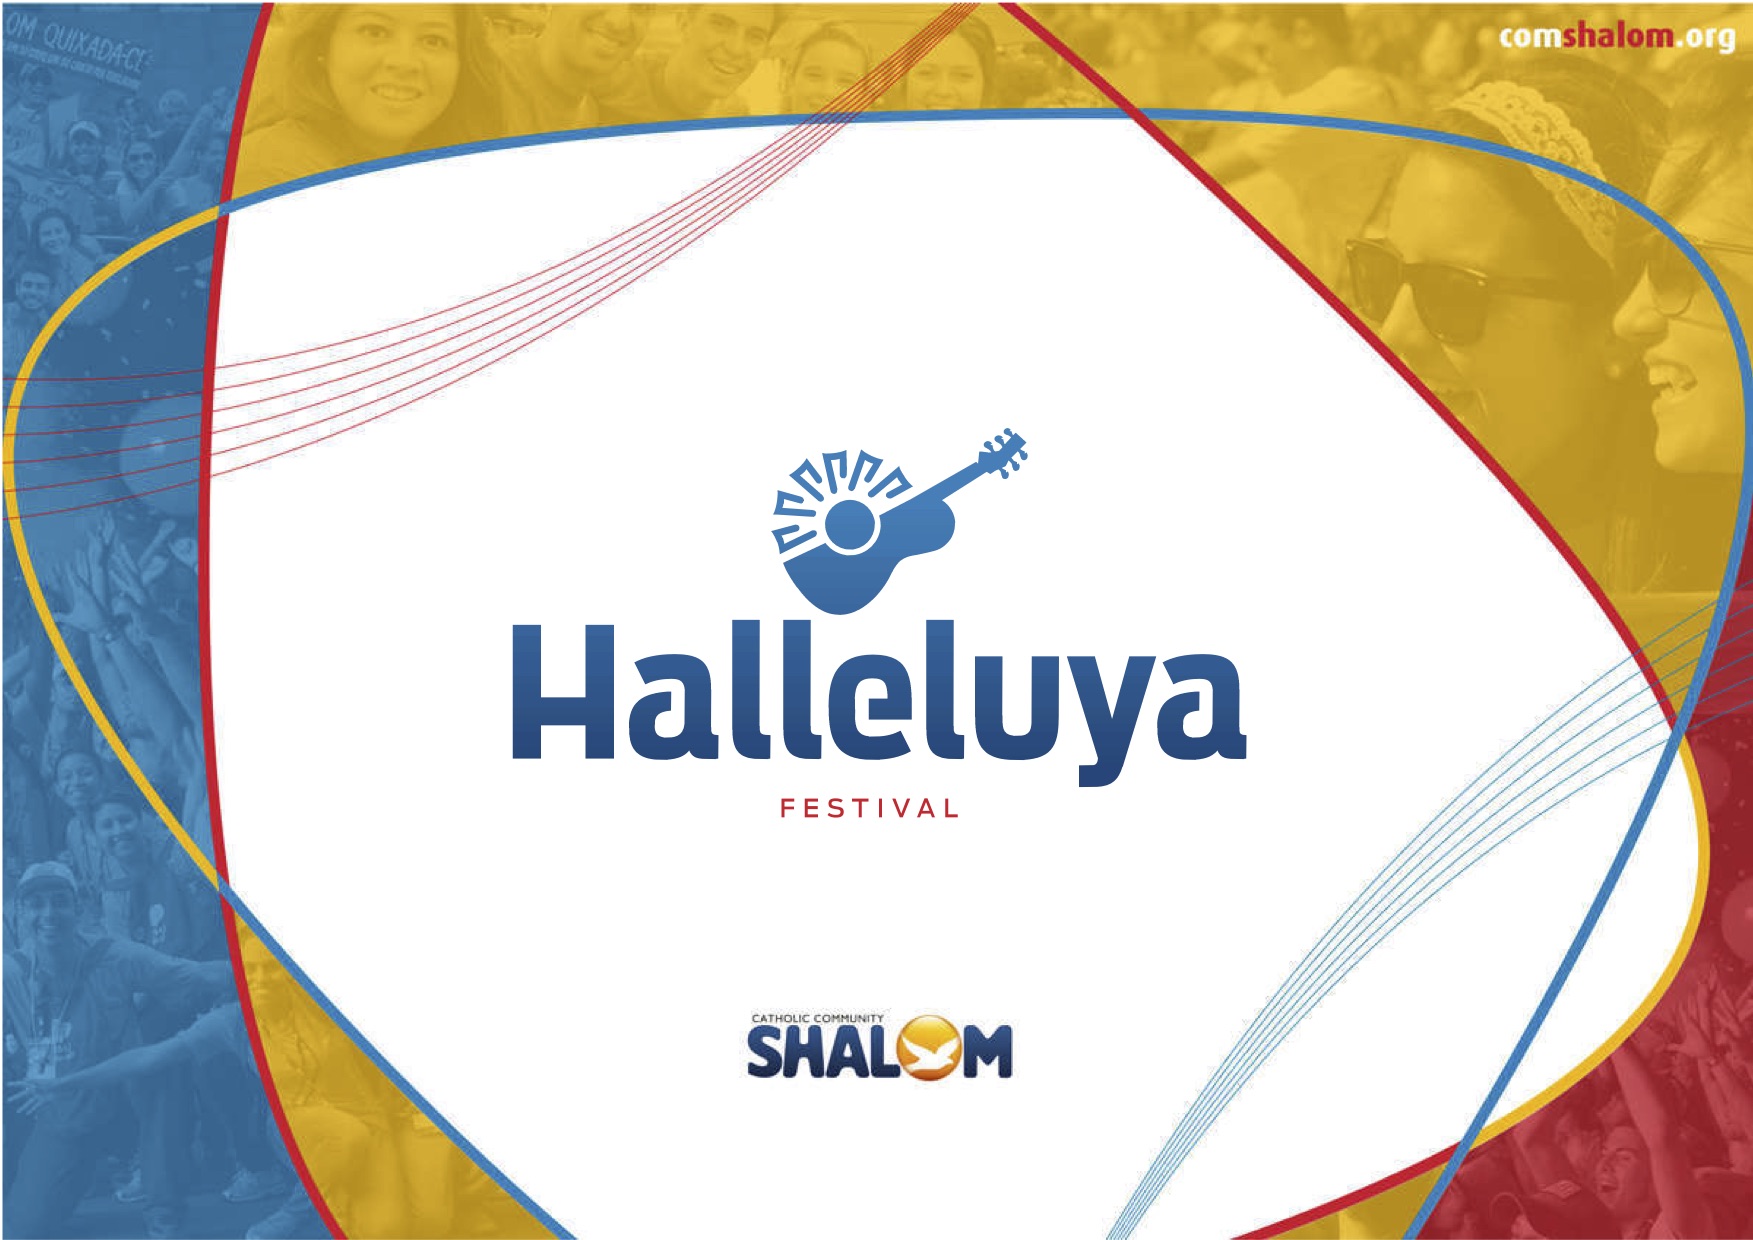 Halleluja Festival